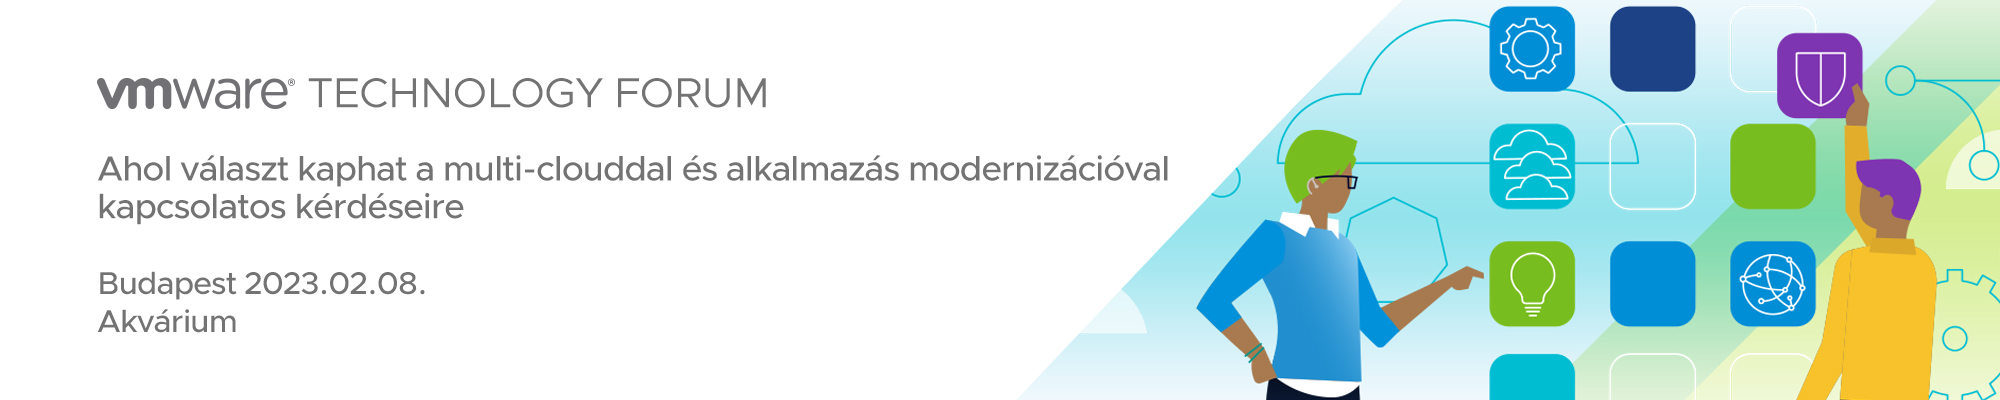 VMware TECHNOLOGY FORUM 2022 Hungary